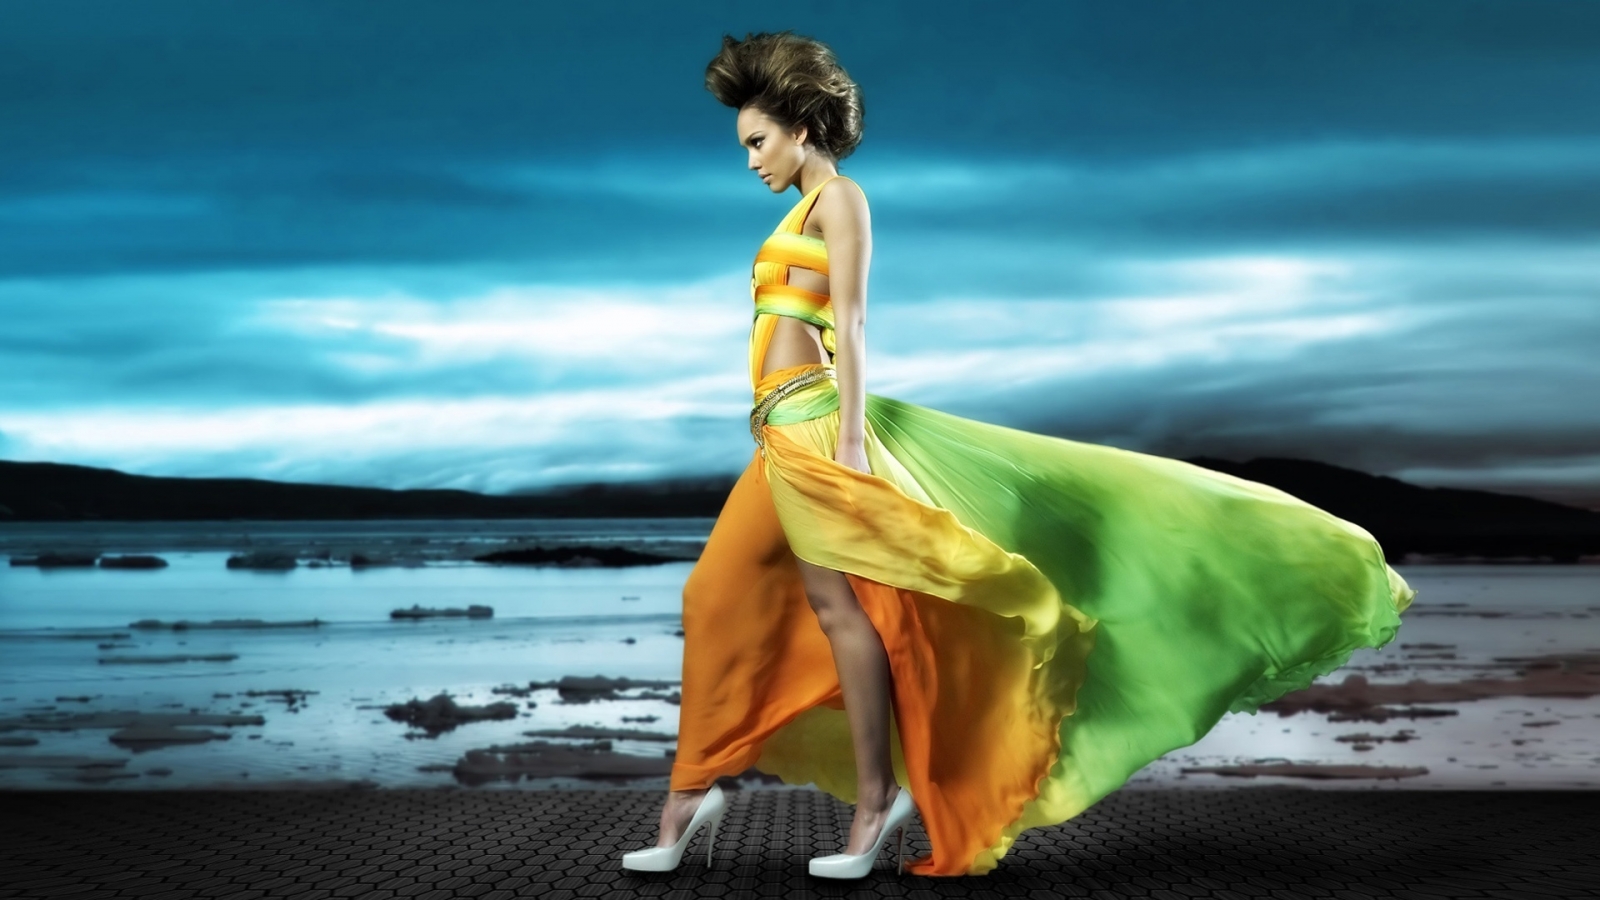 Jessica Alba Raibow Dress for 1600 x 900 HDTV resolution